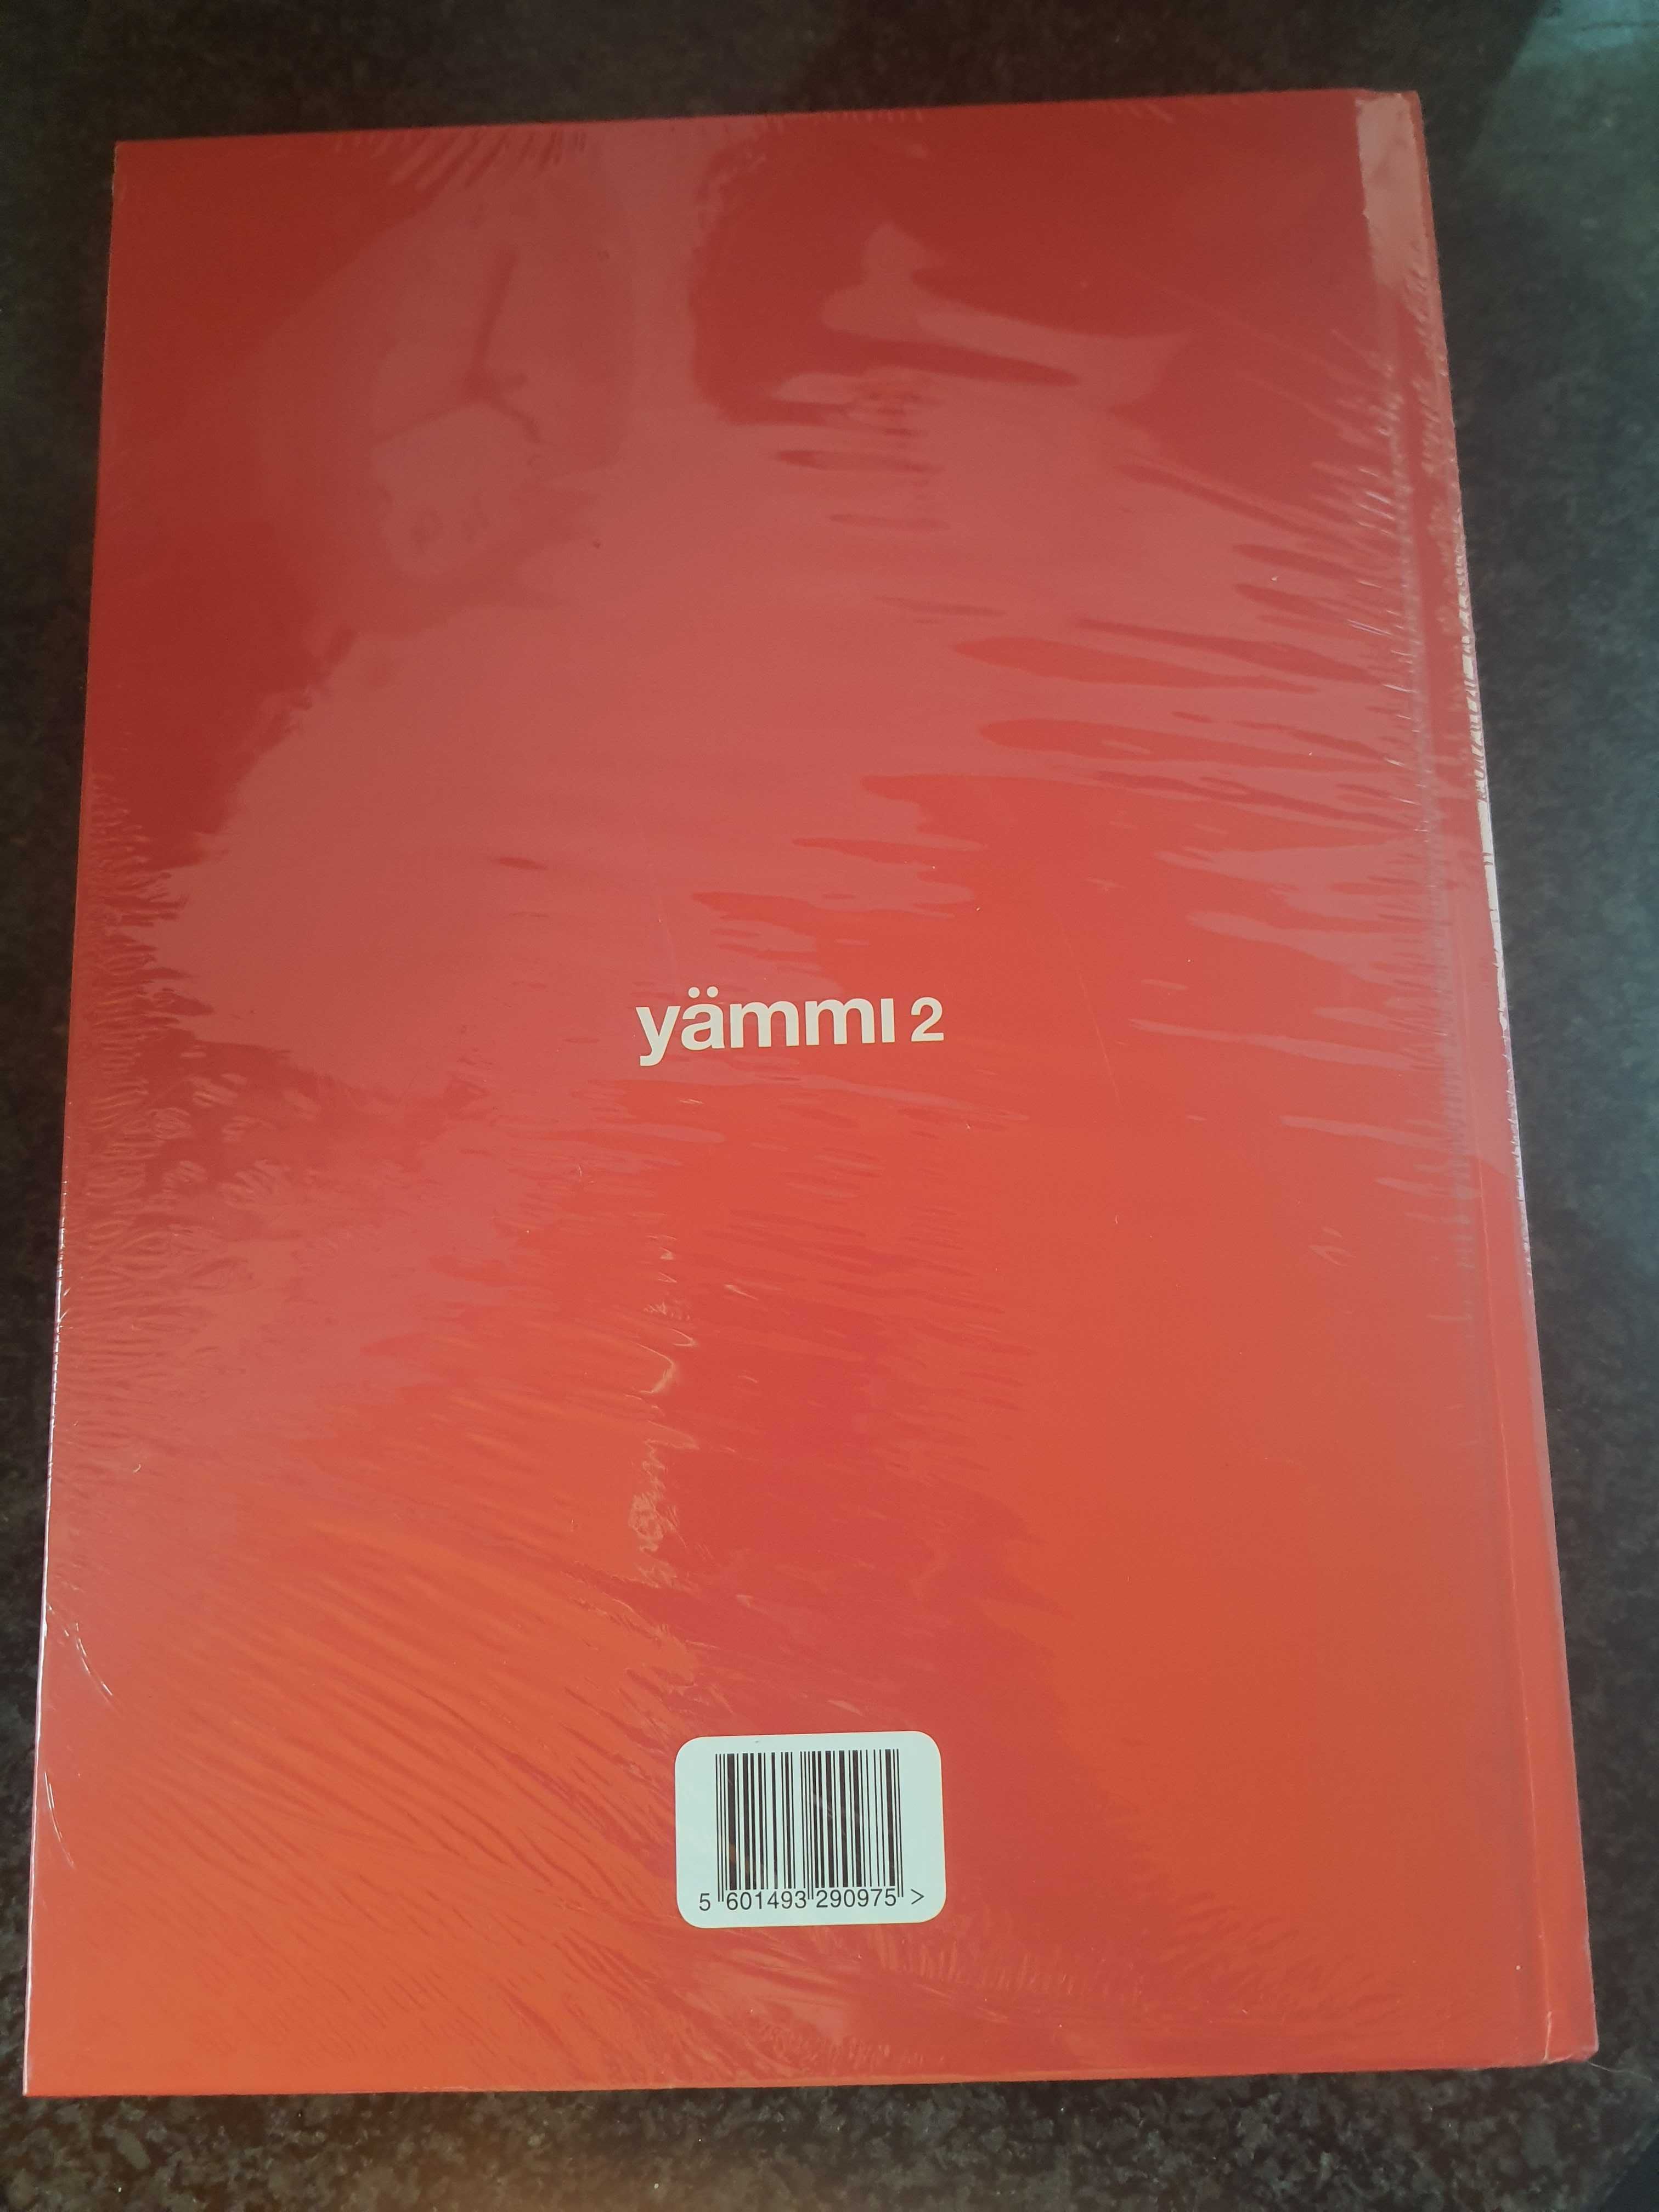 Livro receitas yammi 2 novo